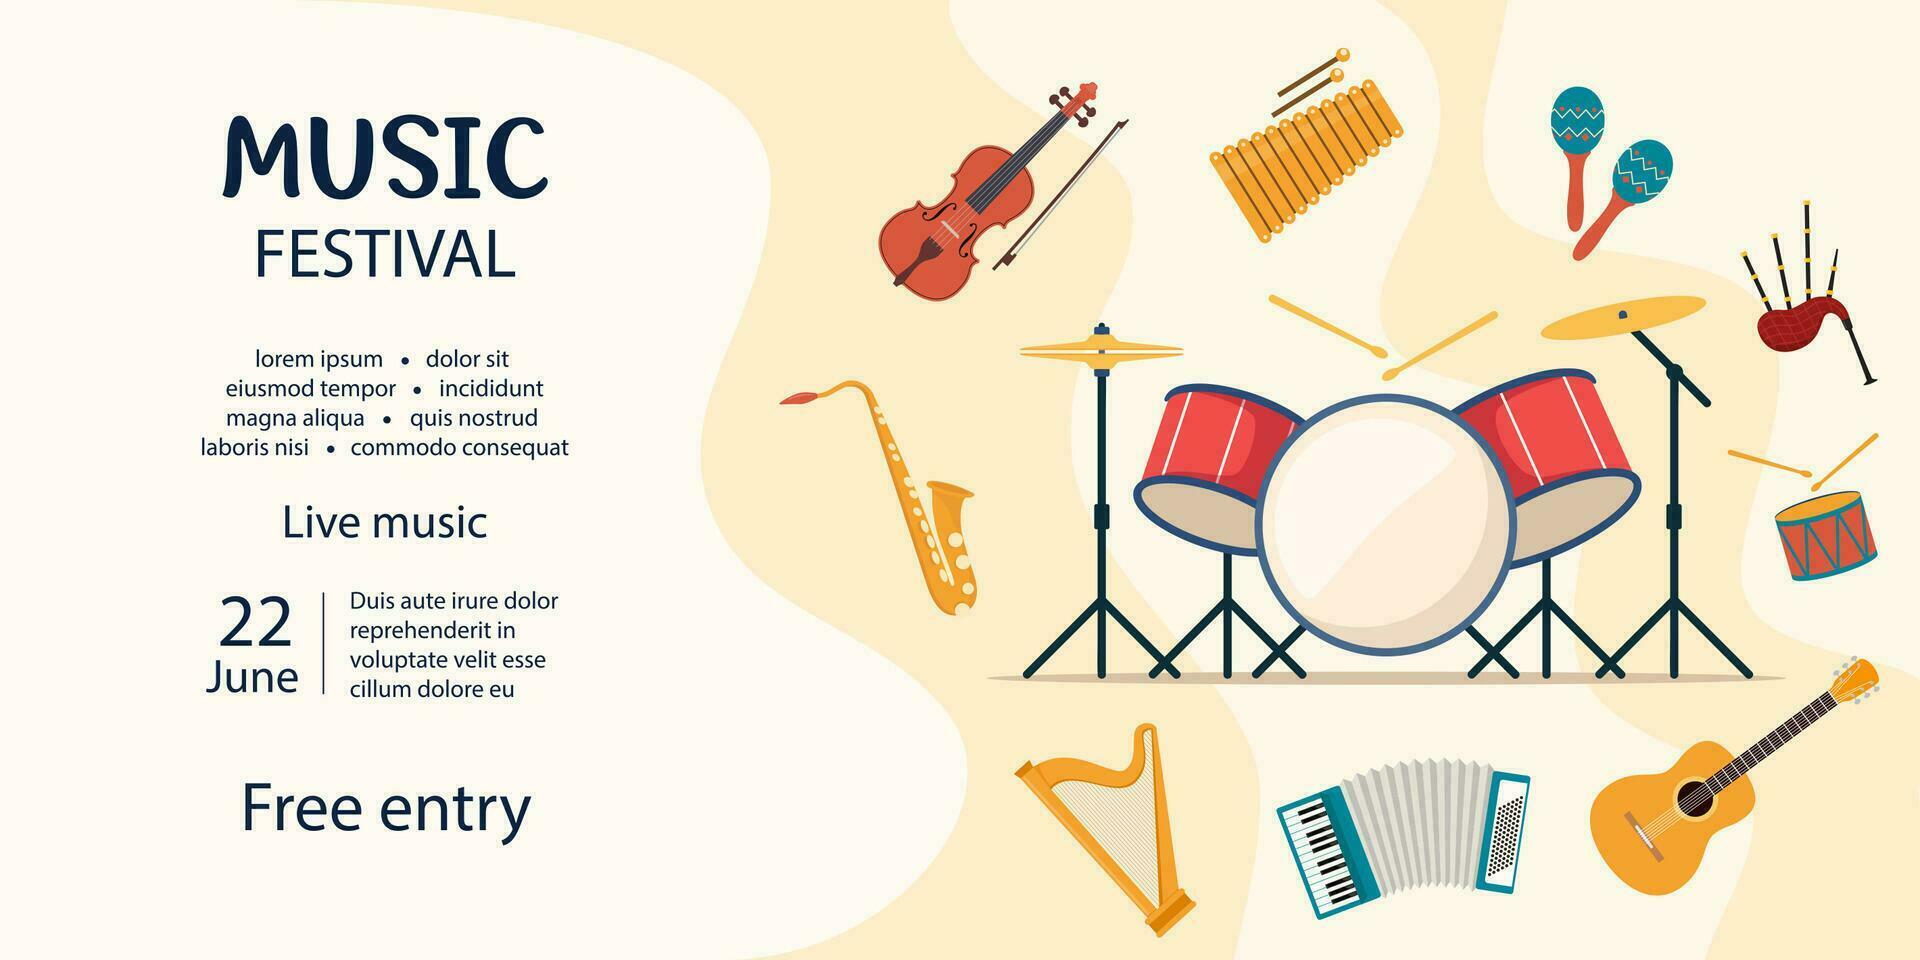 música festival invitación. musical instrumentos guitarra, violín, arpa, dulcimer, maracas, guitarra, tambor equipo, gaita, saxofón. vector ilustración.